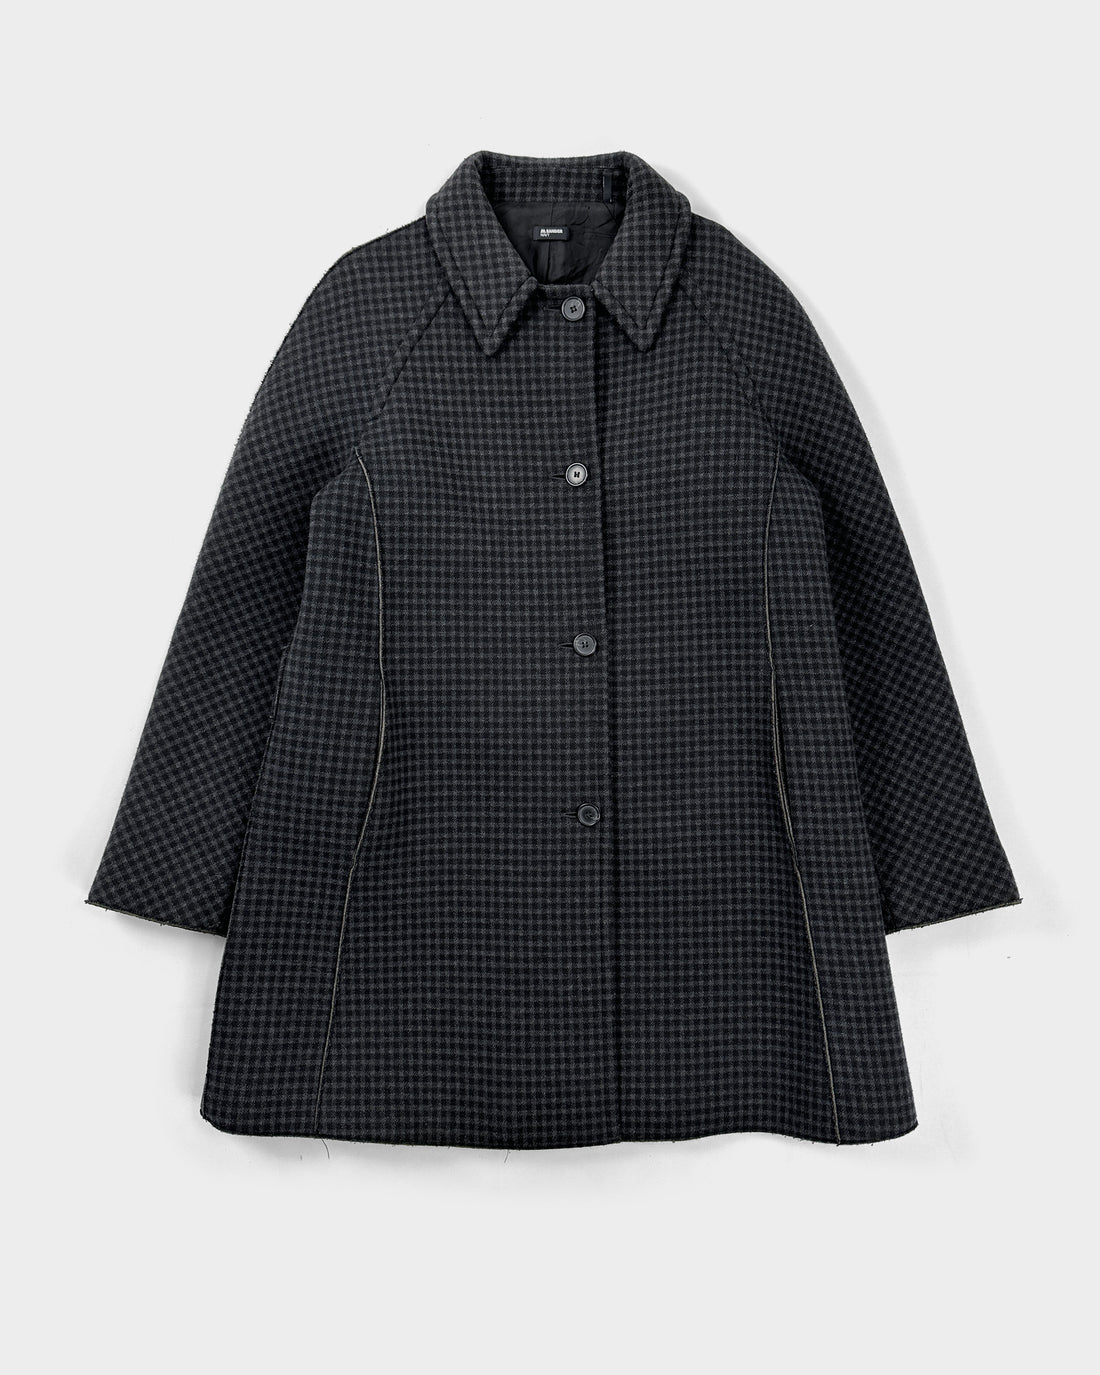 Jil Sander Checkered Dark Grey Long Coat 2000's